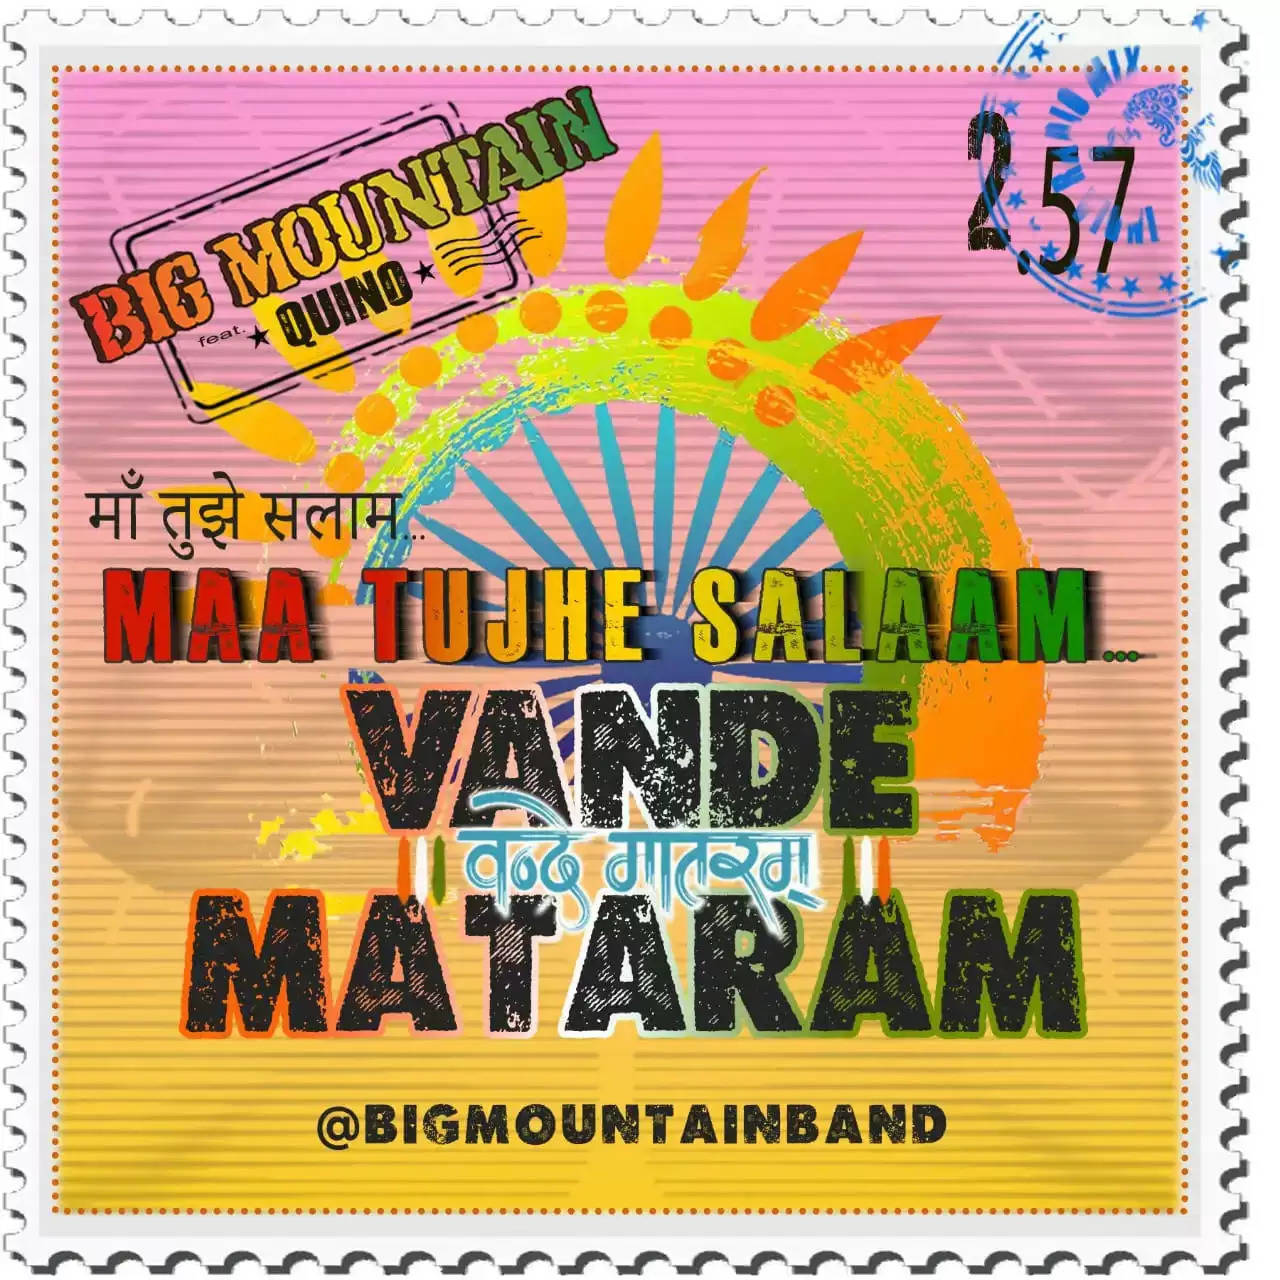 Global Reggae Band Big Mountain's latest Vande Mataram -- Maa Tujhe Salaam pays tribute to India